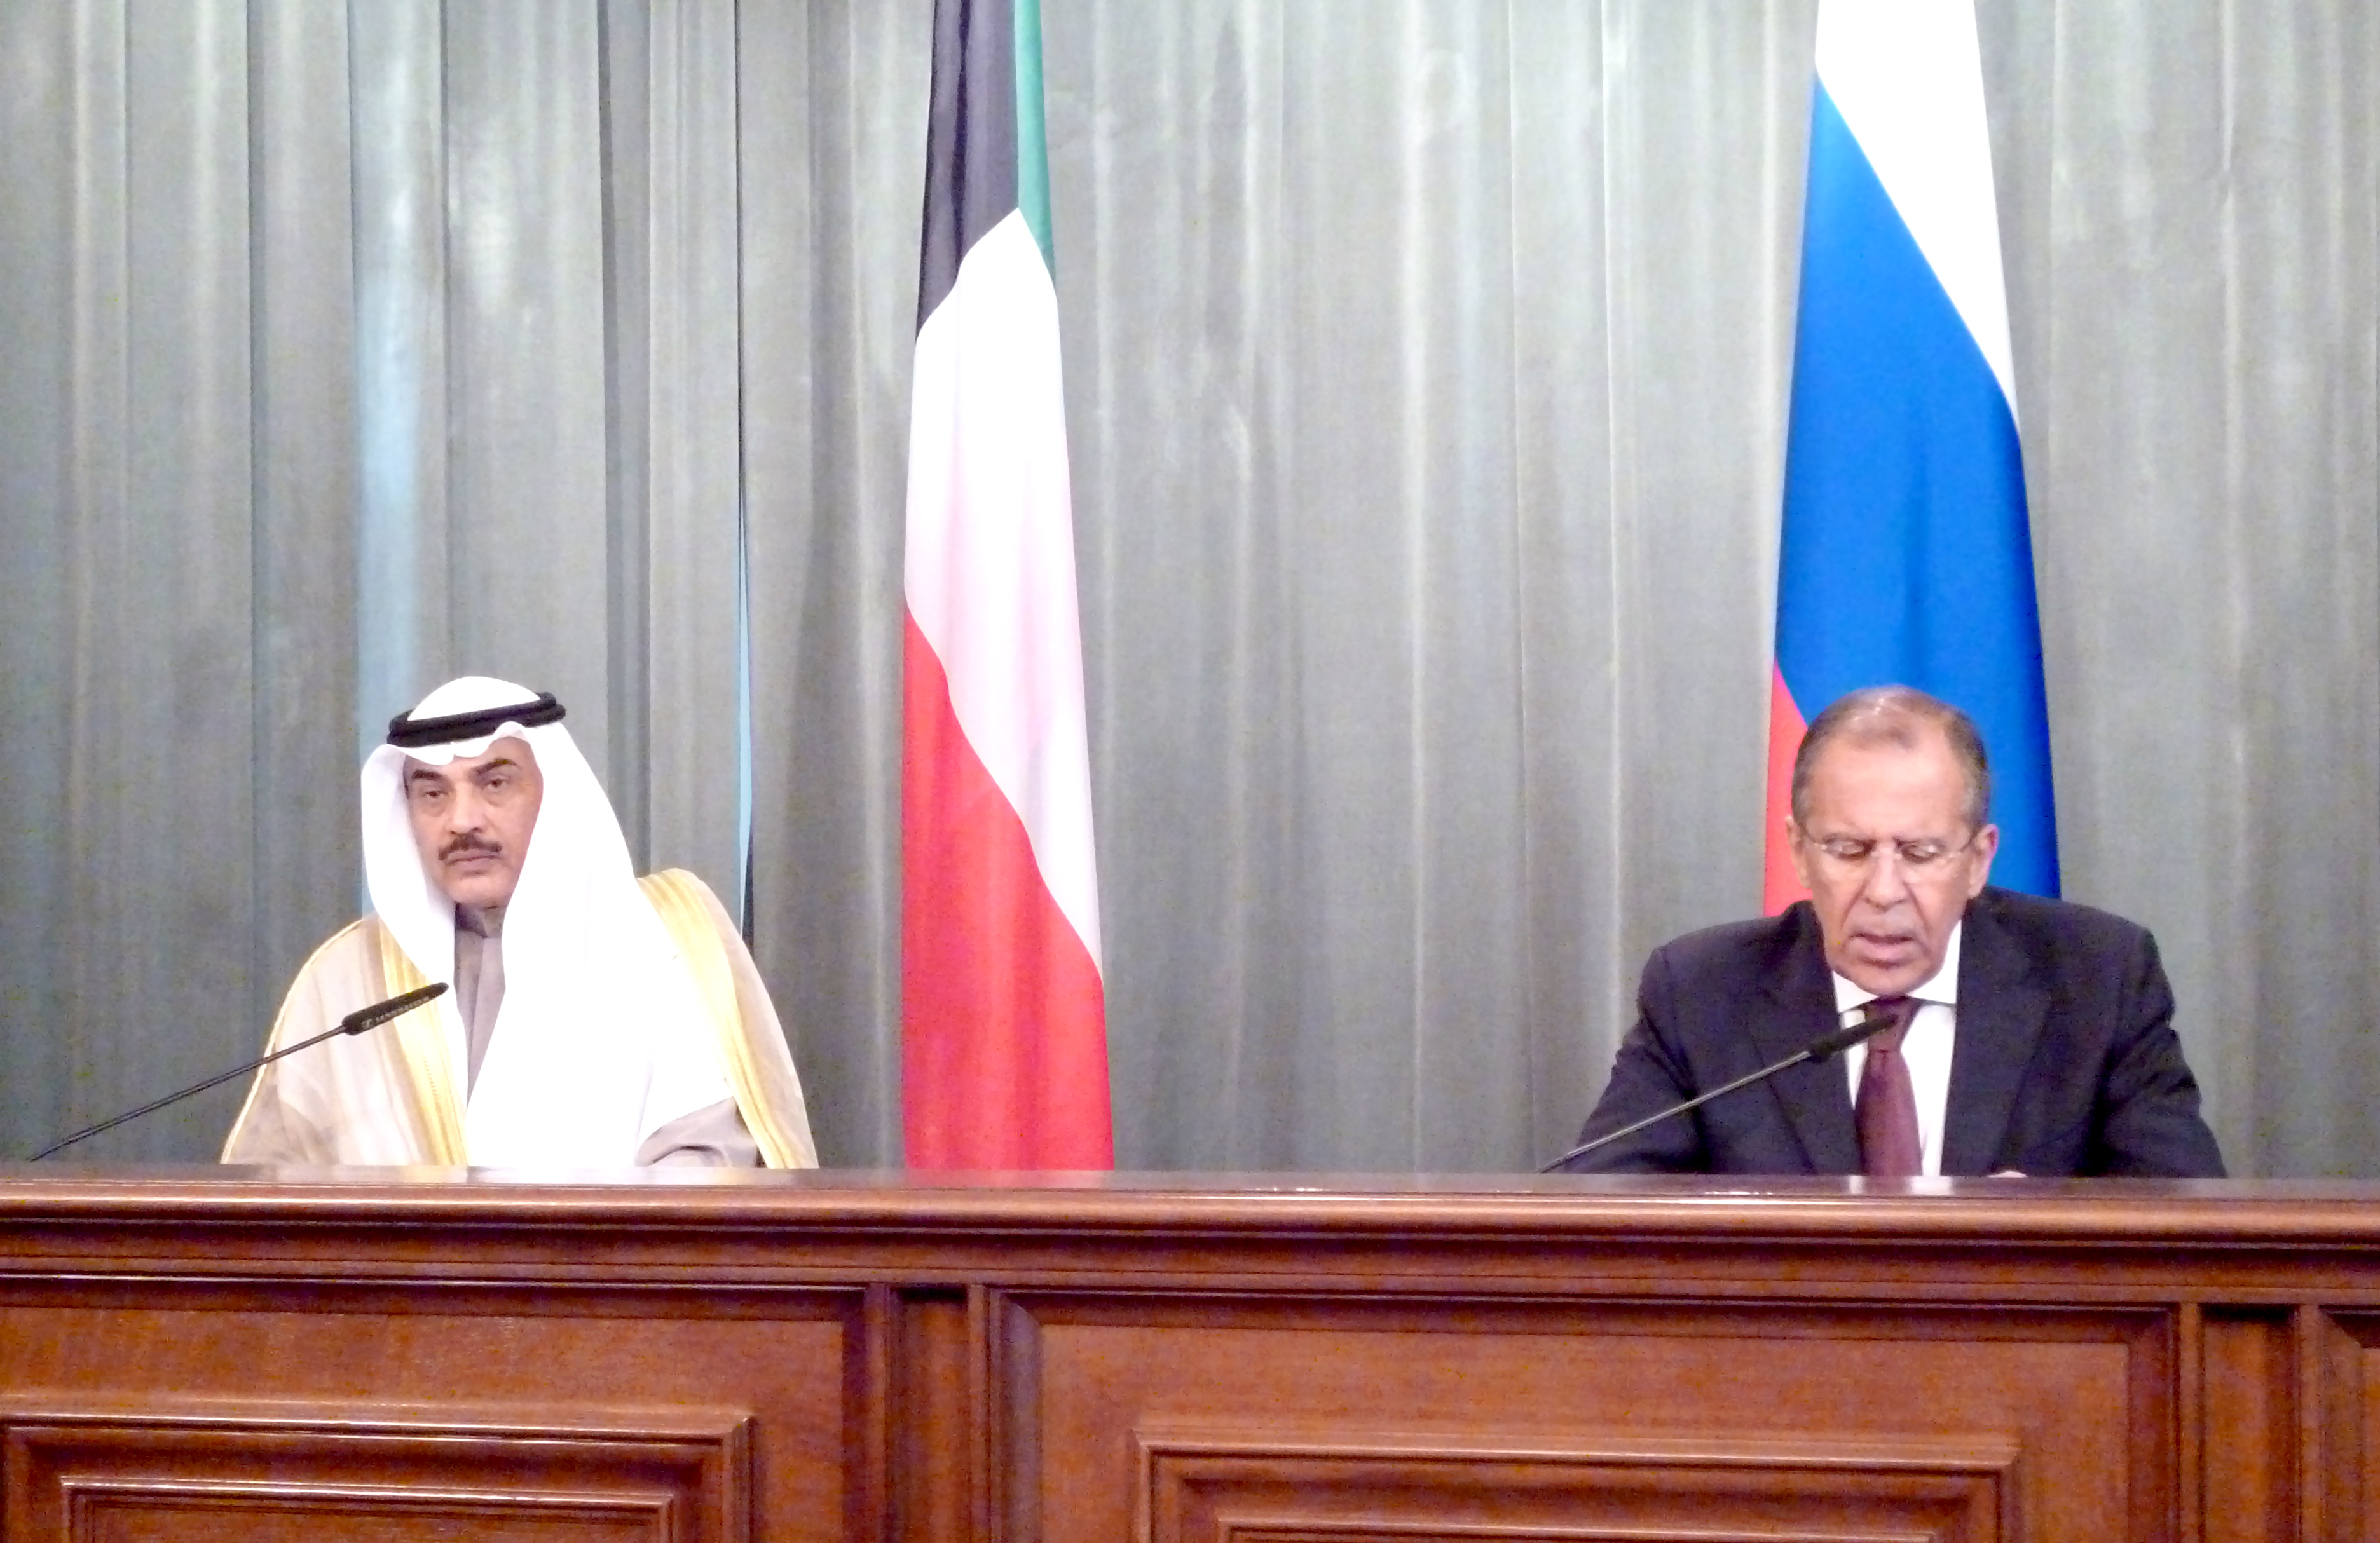 Kuwaiti and Russian foreign ministers, Sheikh Sabah Al-Khalid Al-Sabah and Sergey Lavrov